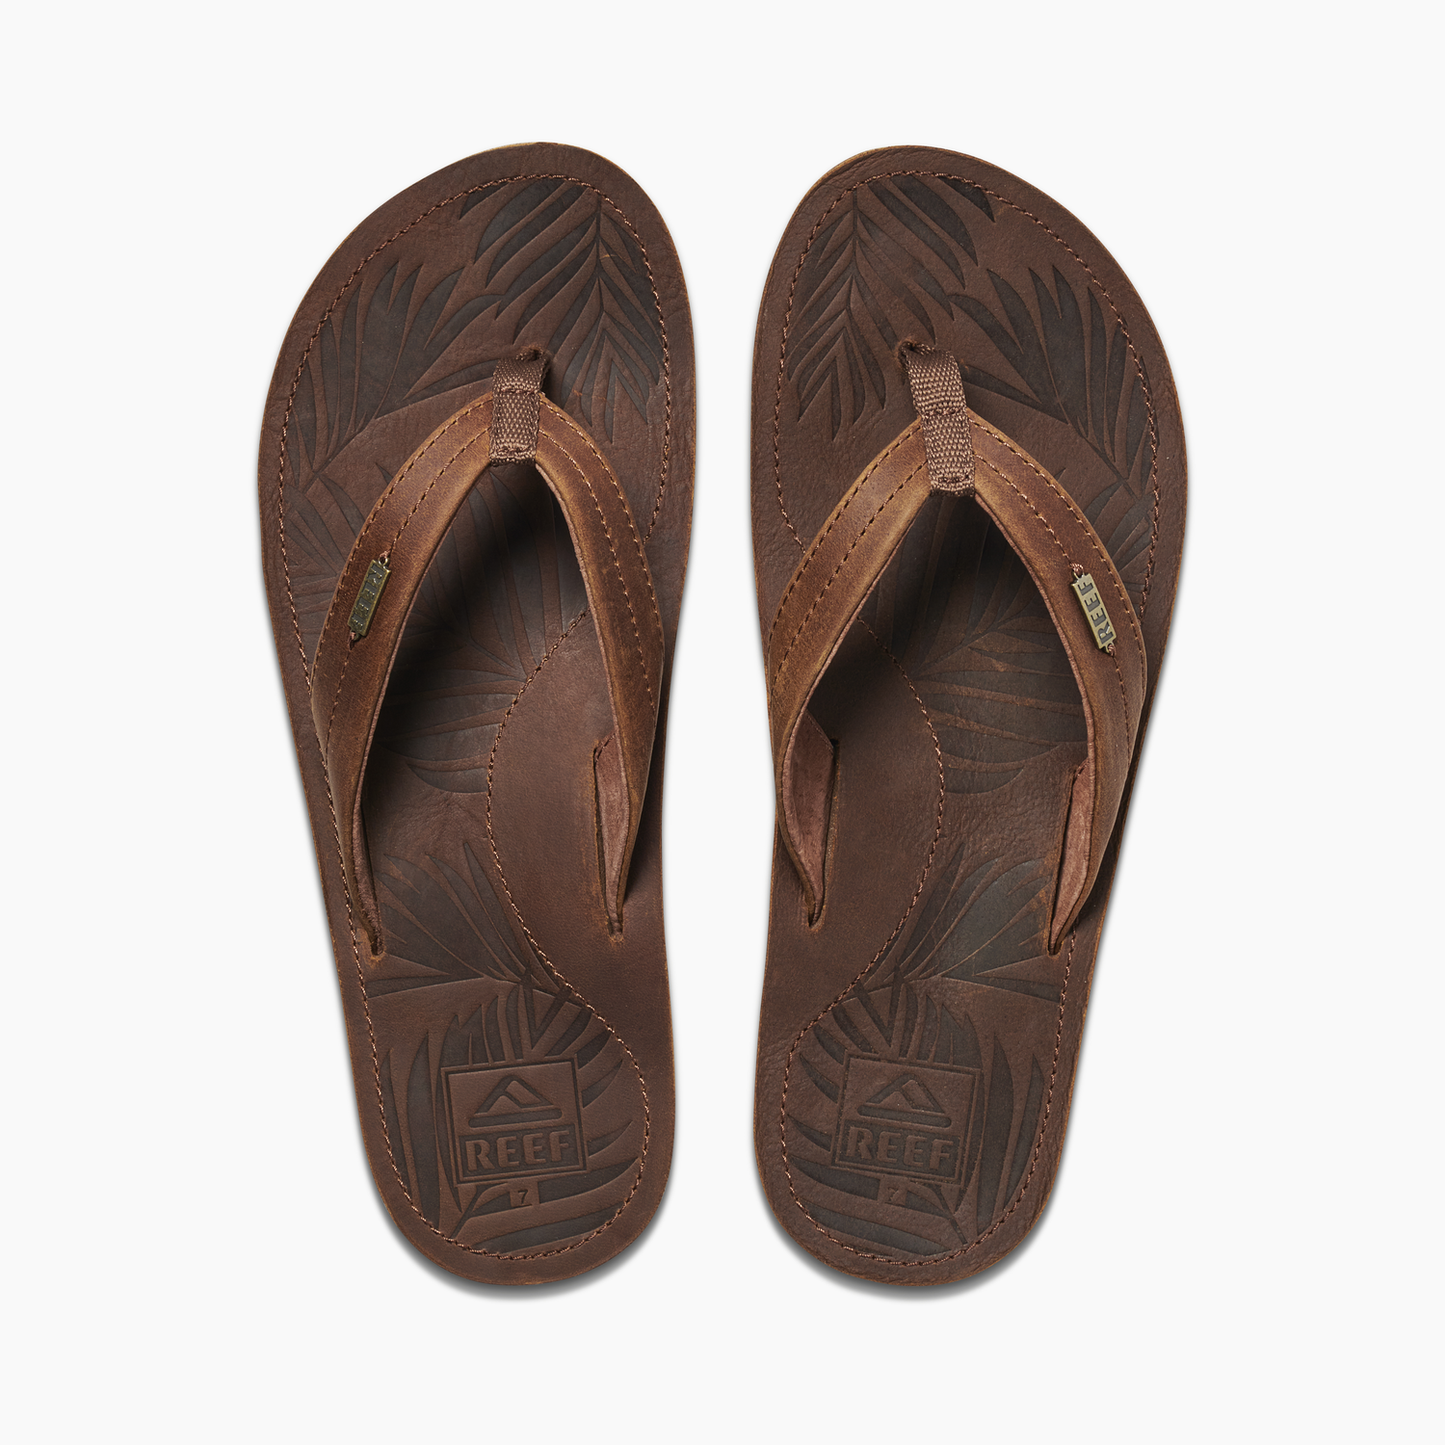 Reef Drift Away Le Womens Sandals - Caramel Womens Footwear